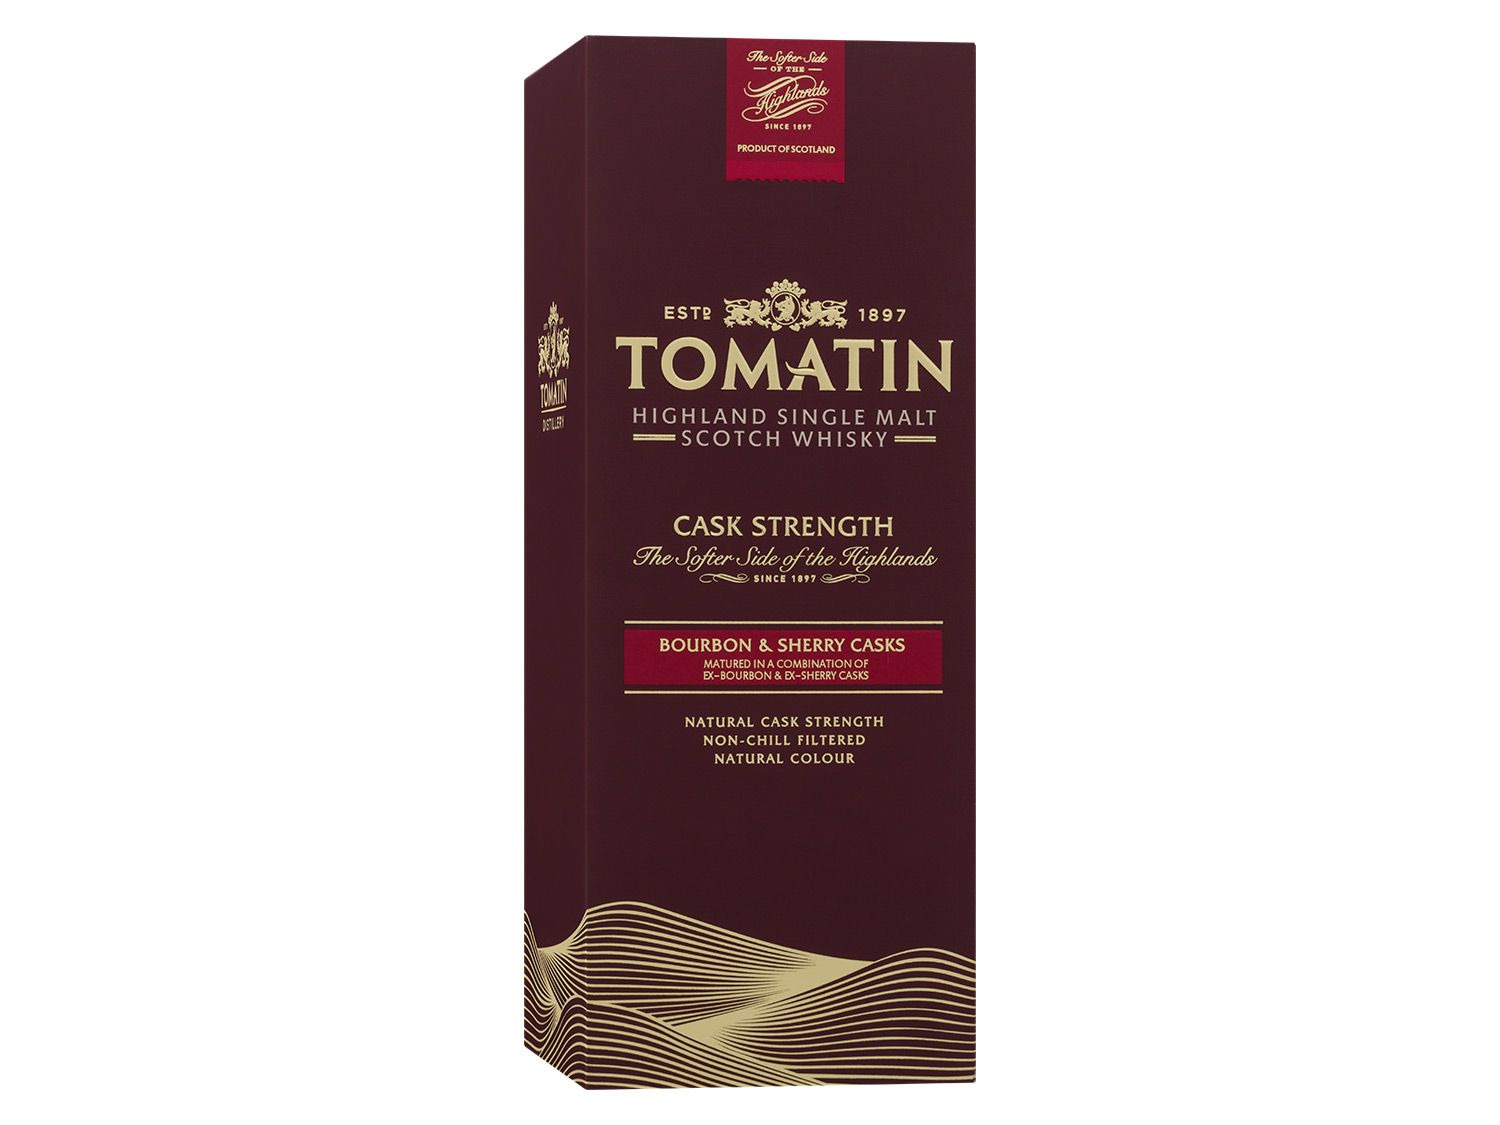 Tomatin Cask Strength Malt Whis… Highland Scotch Single